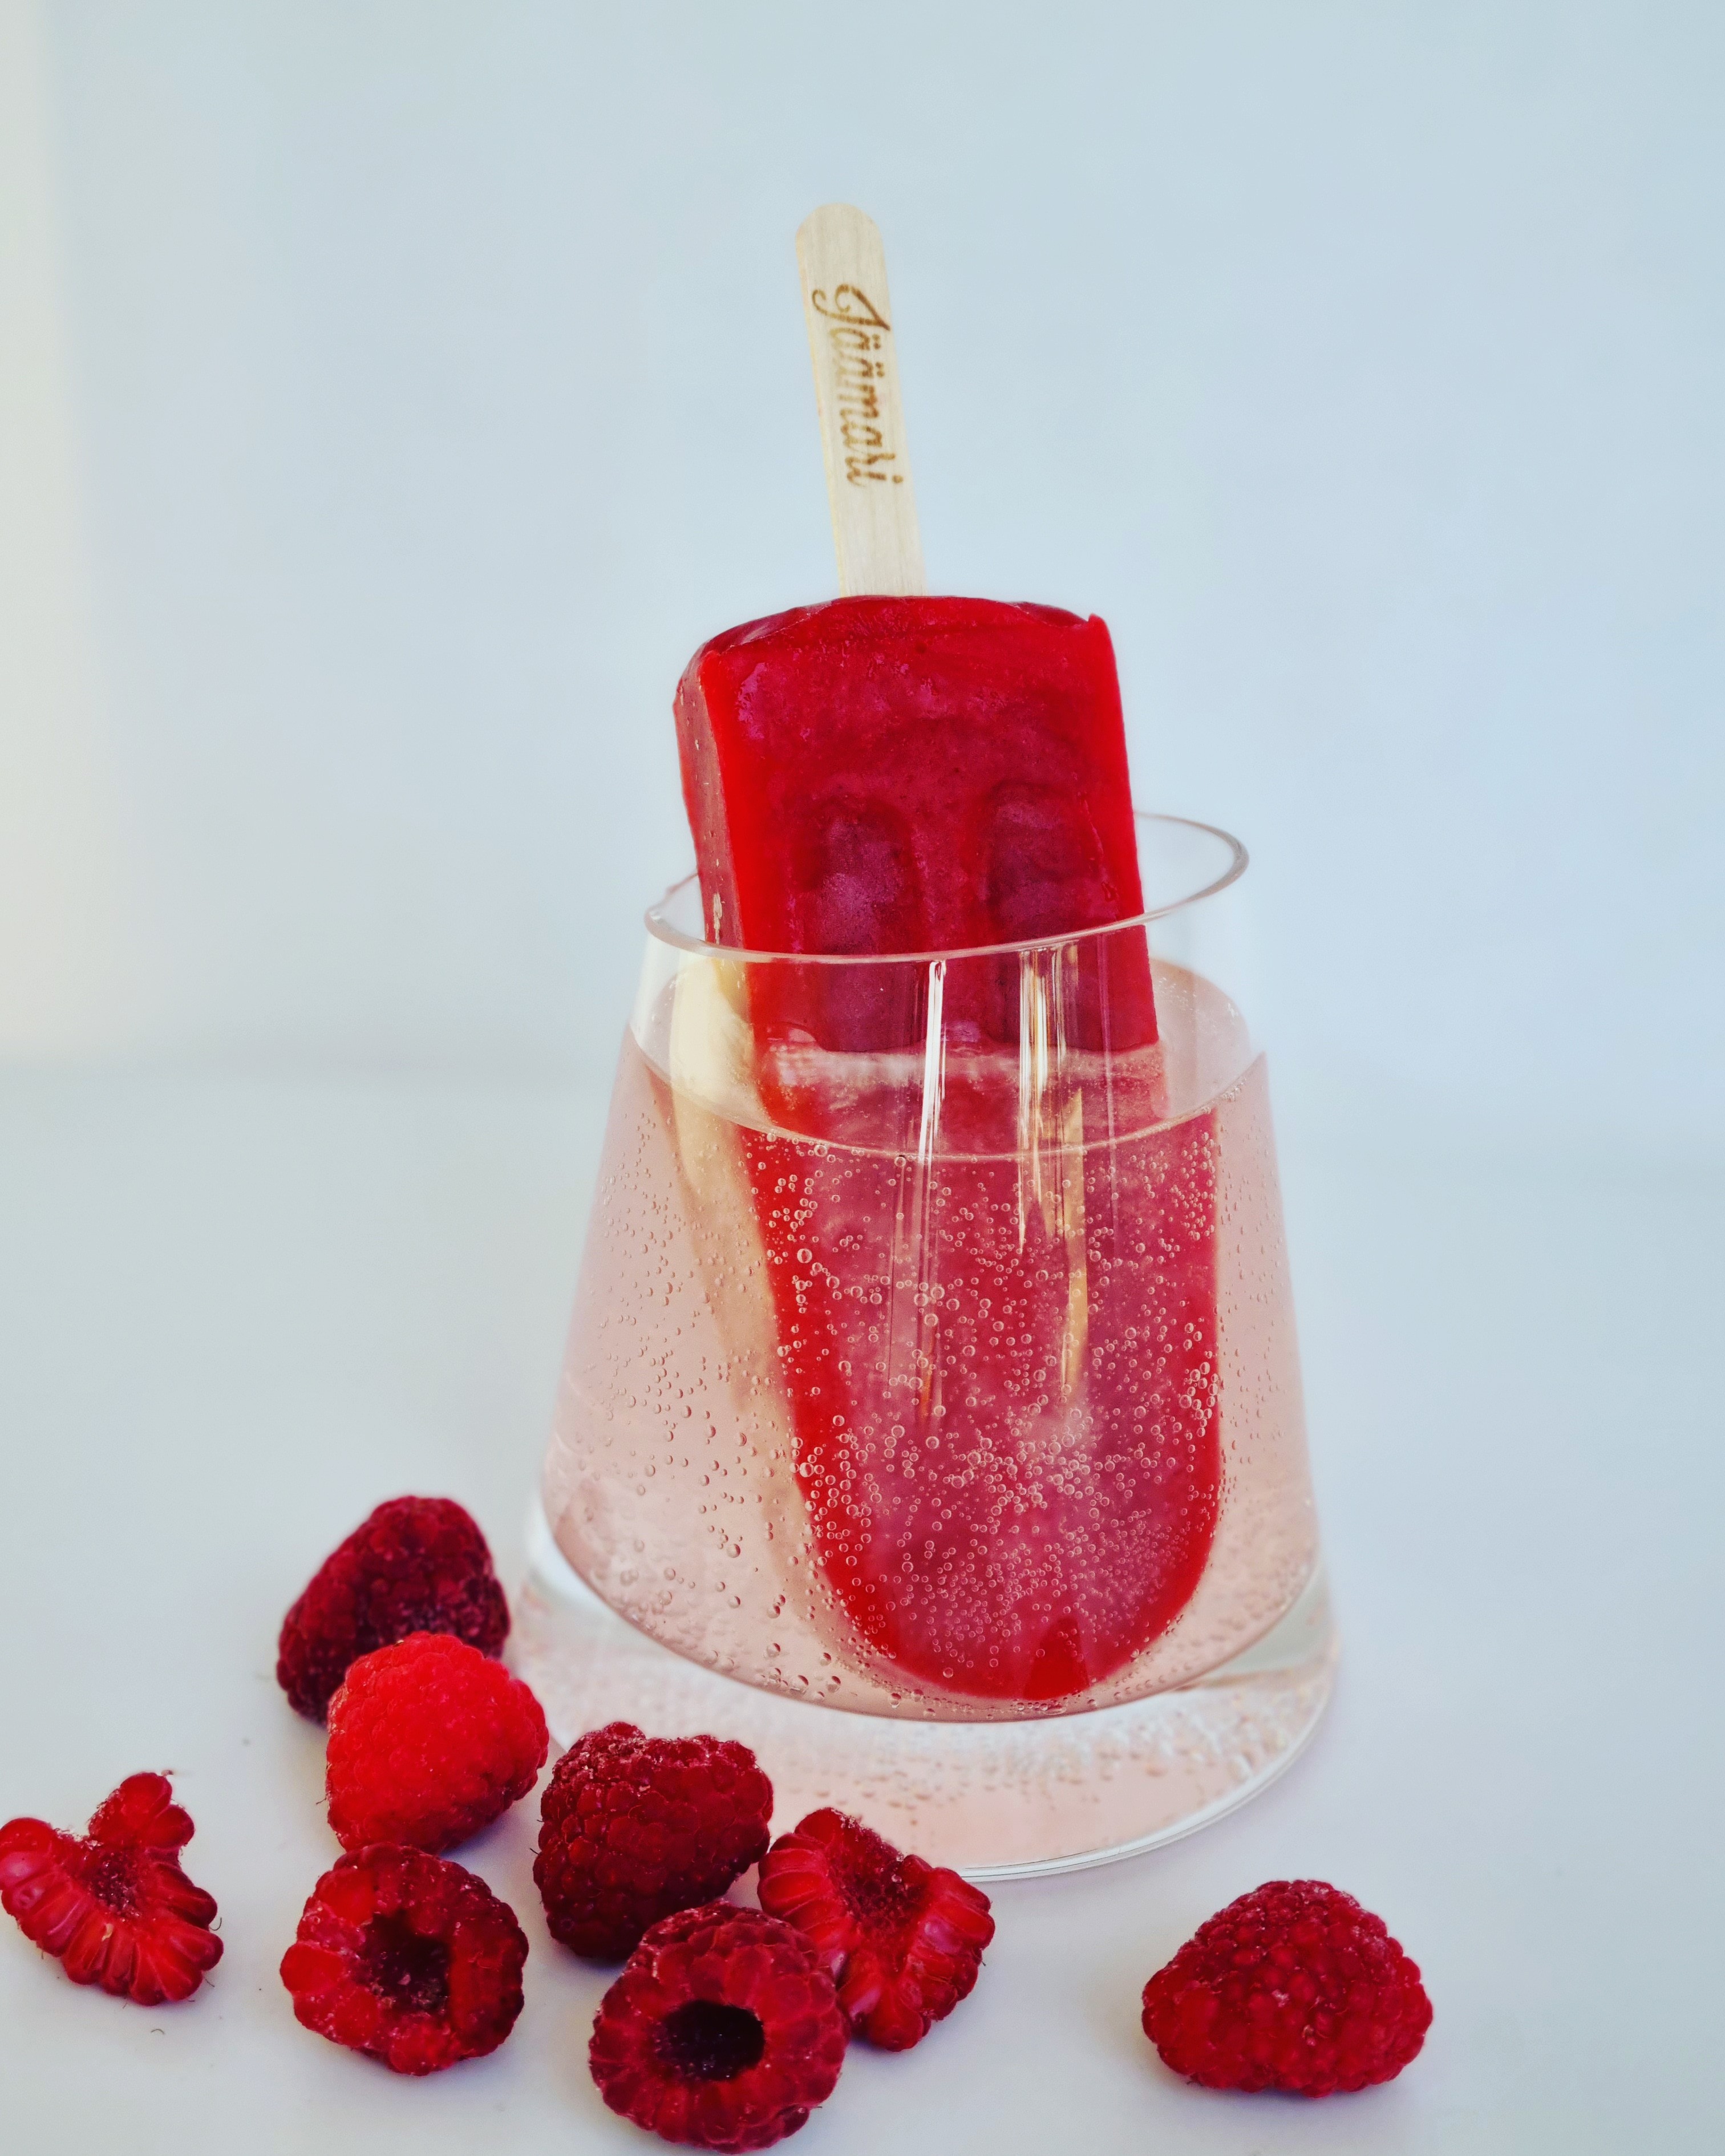 Gin-tonic raspberry popsicle